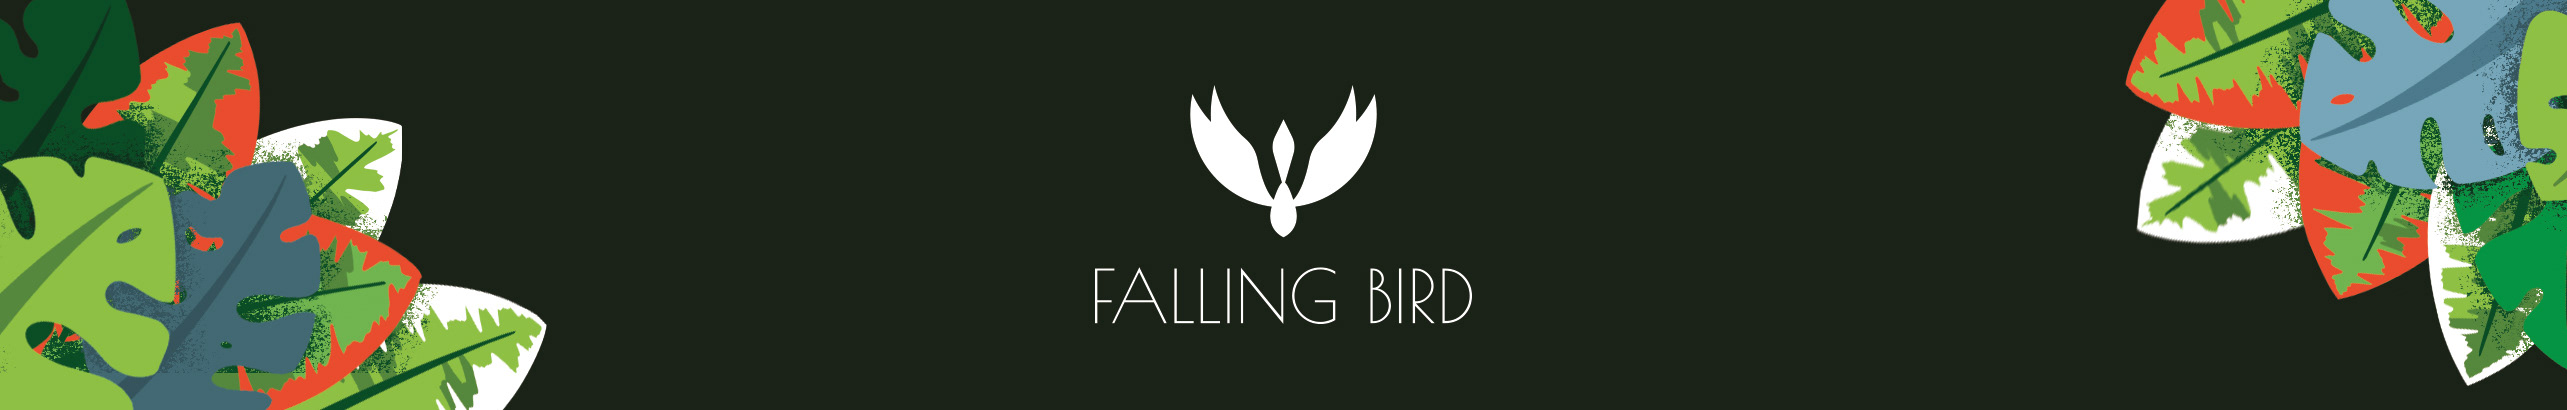 Banner de perfil de Falling Bird